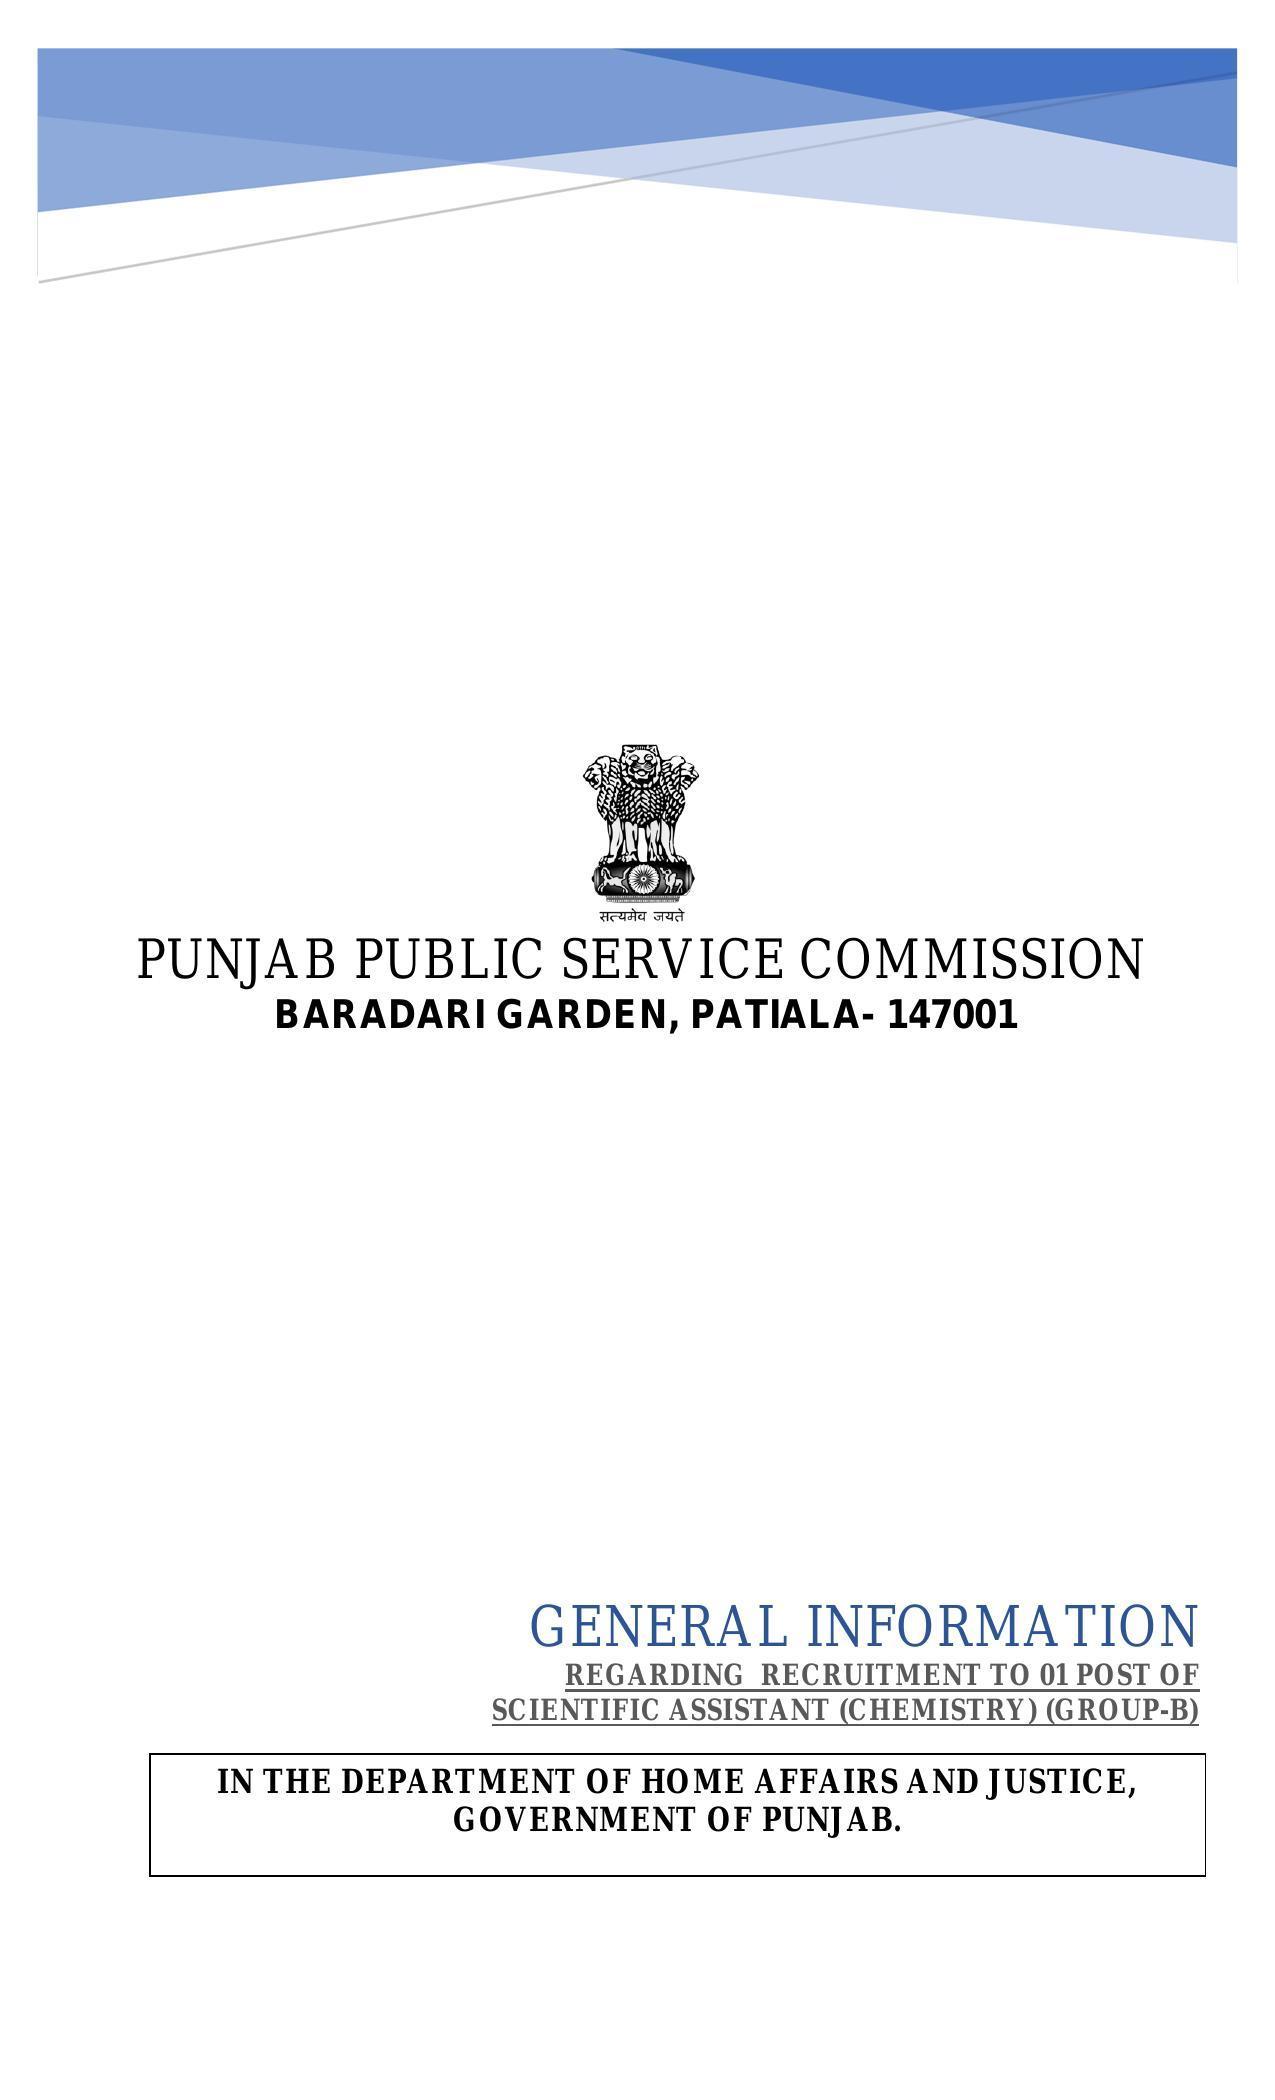 Punjab Public Service Commission Invites Application for Scientific Assistant Recruitment 2022 - Page 4